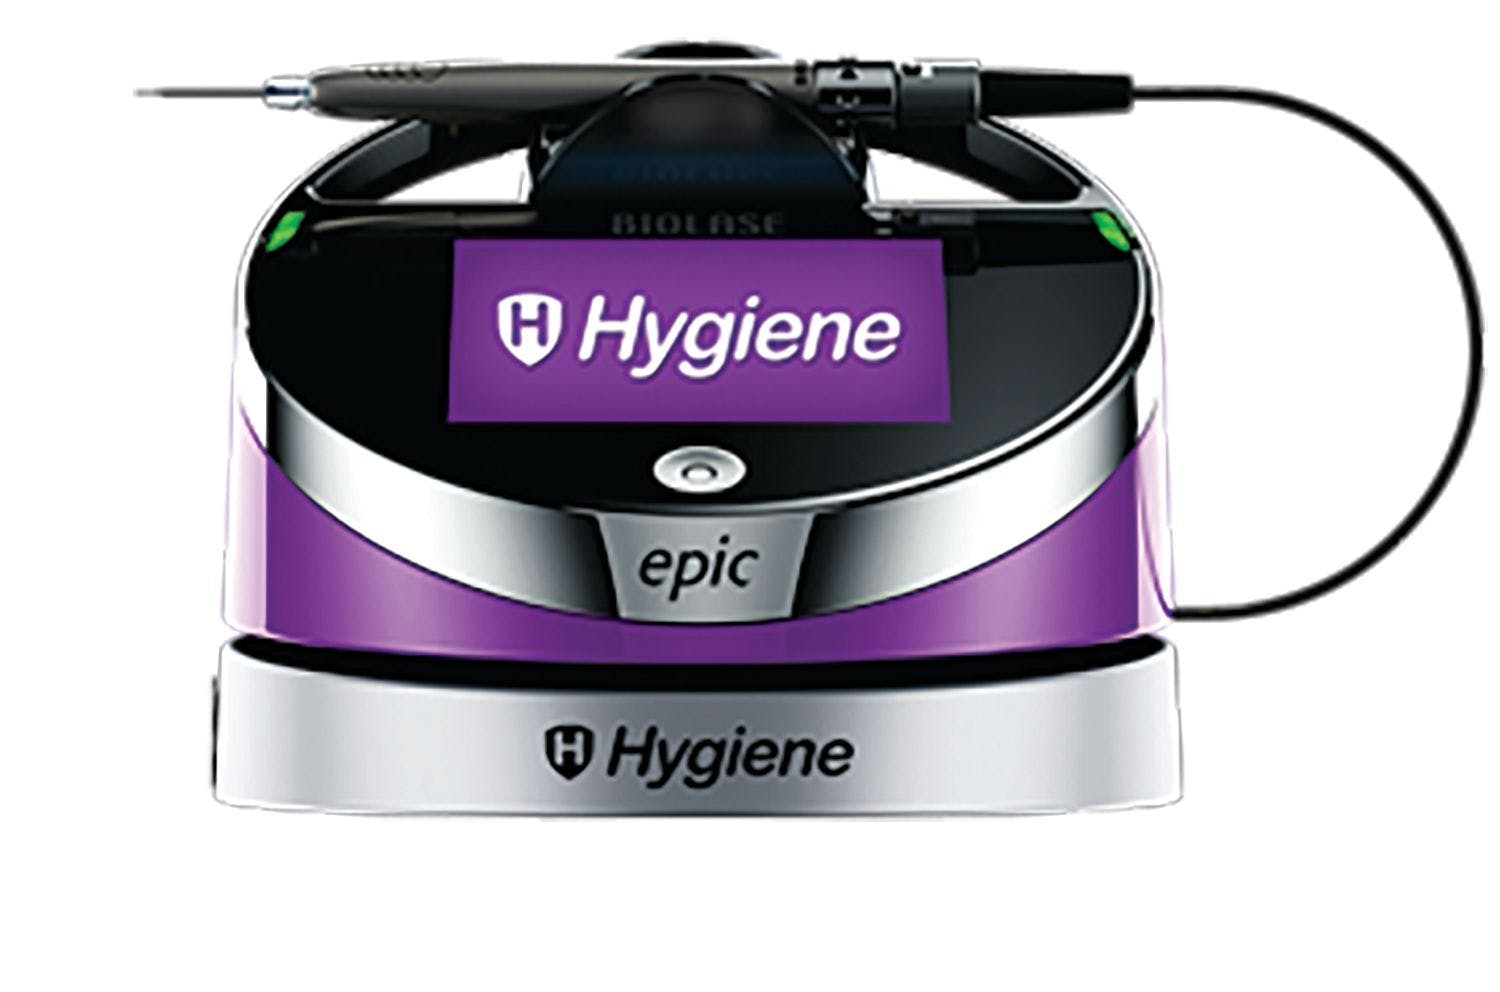 BIOLASE epic Hygiene Laser